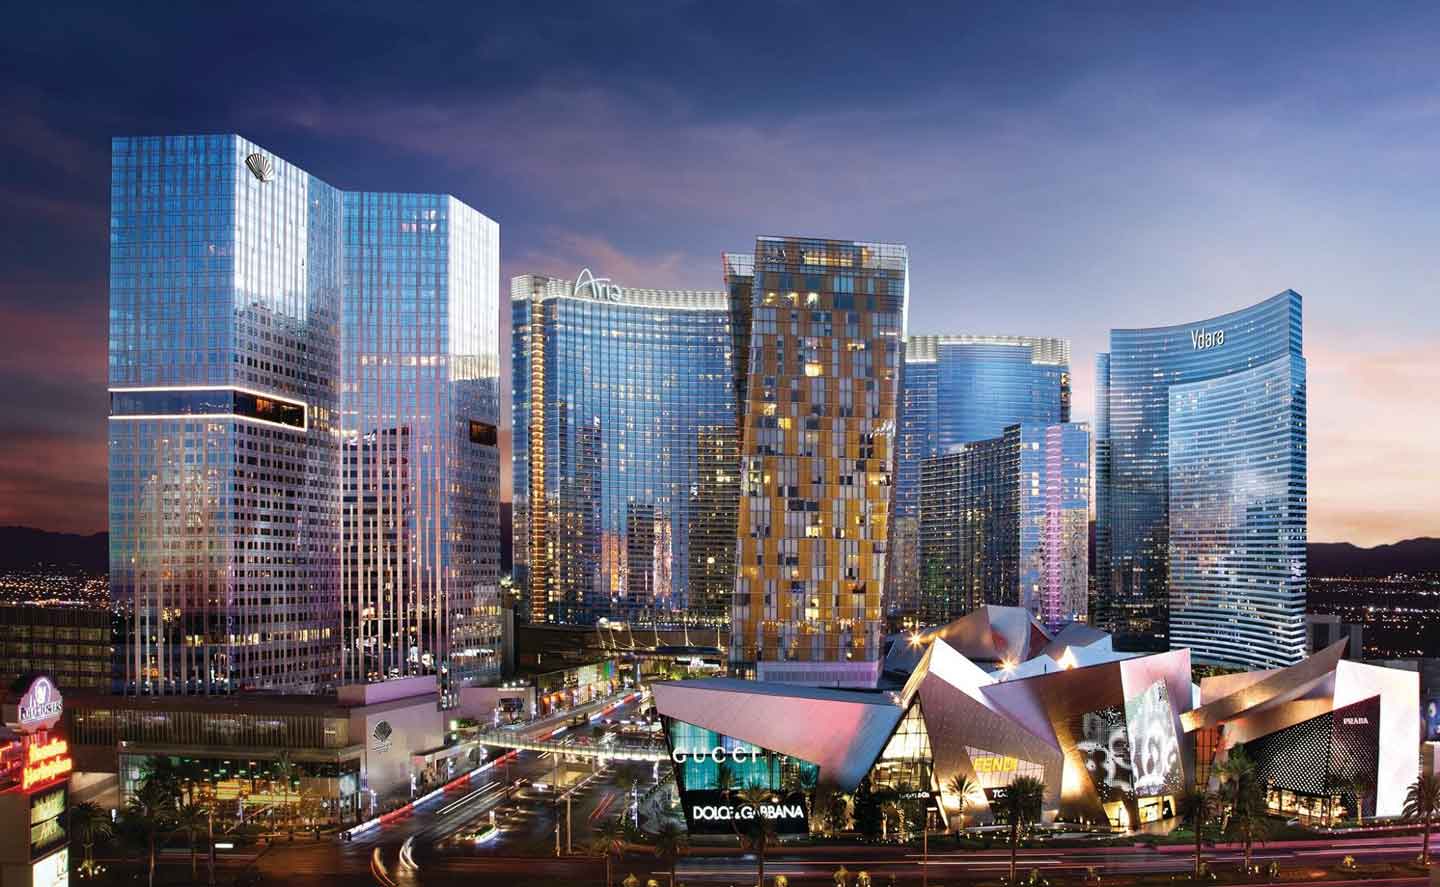 City Center highrise condos on the Las Vegas strip